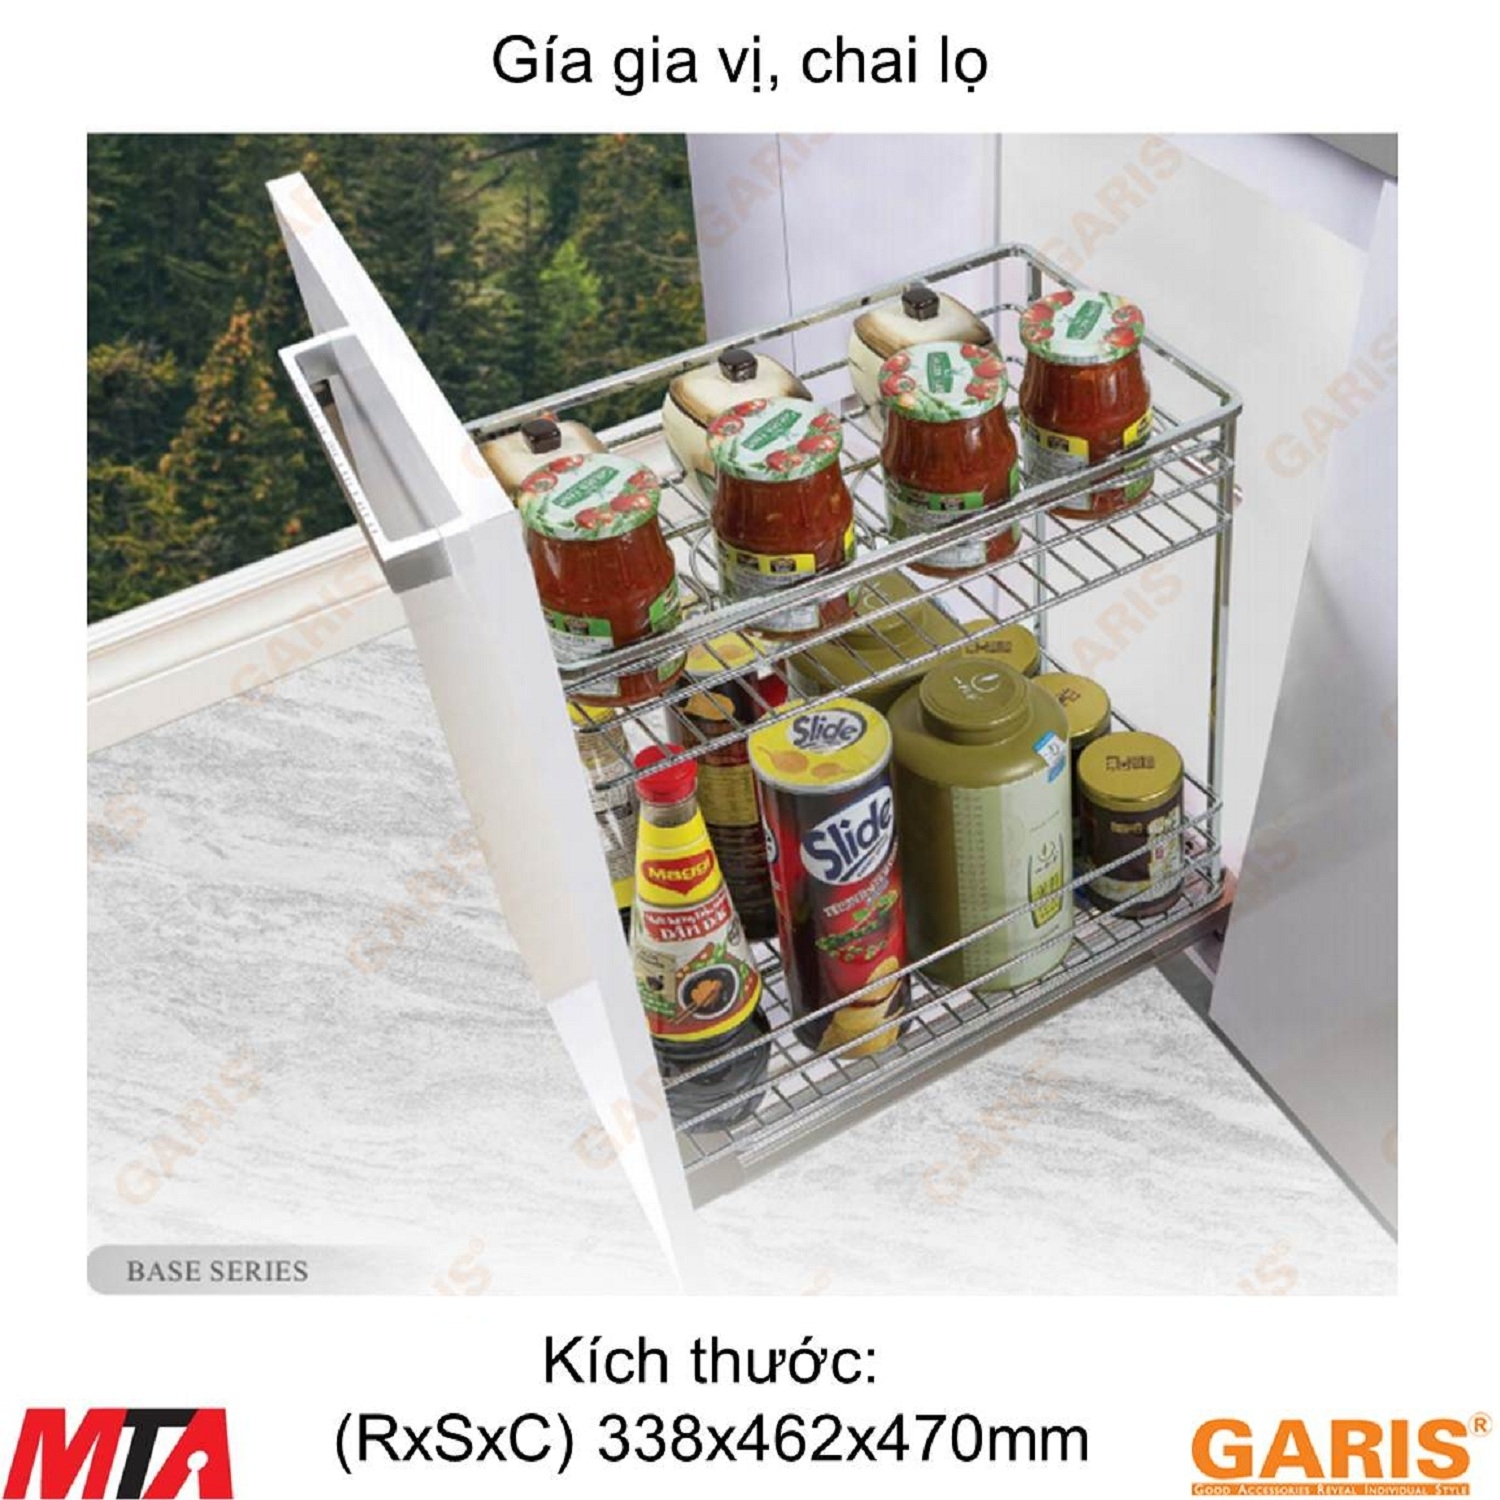 Giá gia vị chai lọ Garis GK02.40E